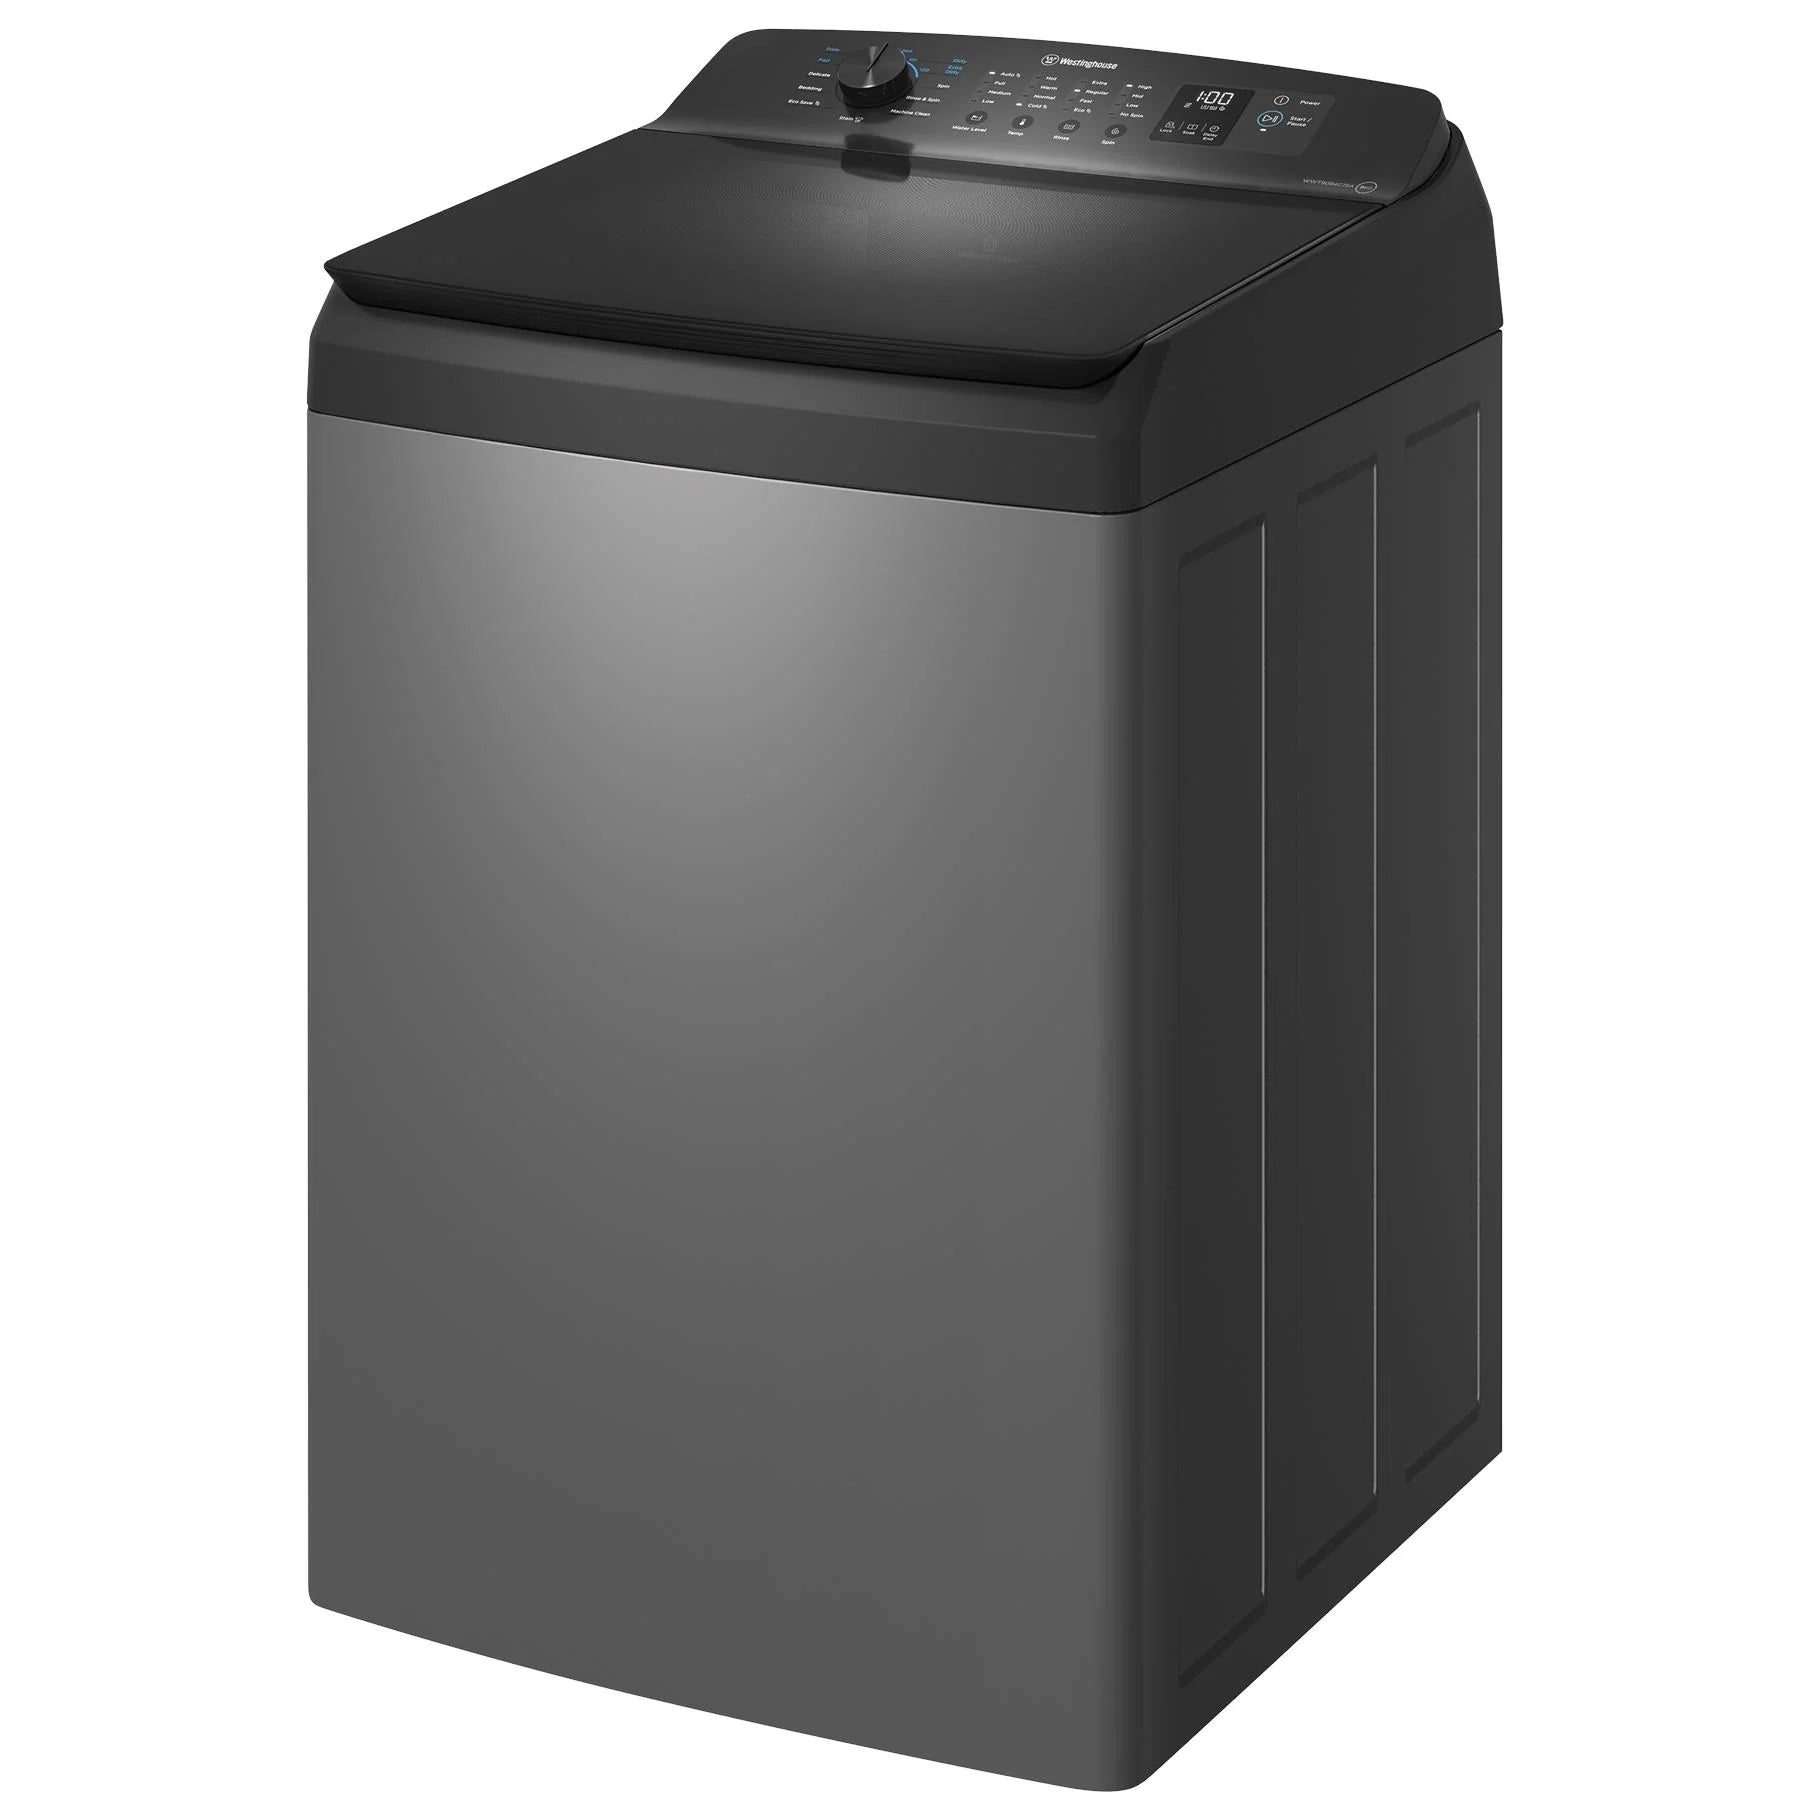 Westinghouse 9kg Top Load Washing Machine - Brisbane Home Appliances